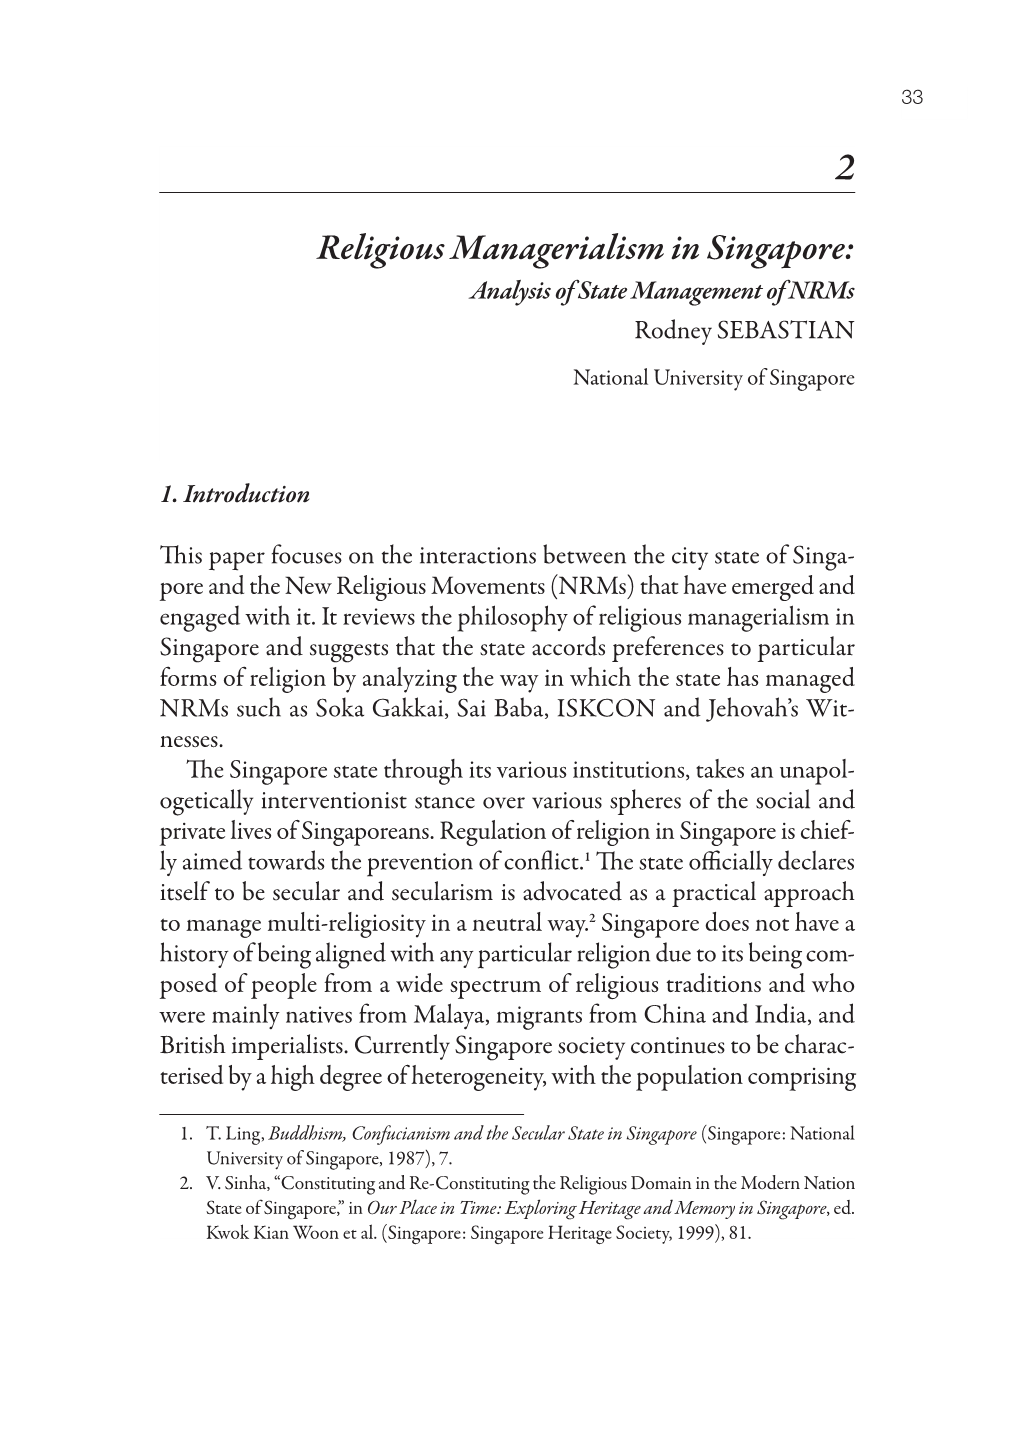 Religious Managerialism in Singapore: Analysis of State Management of Nrms Rodney SEBASTIAN National University of Singapore